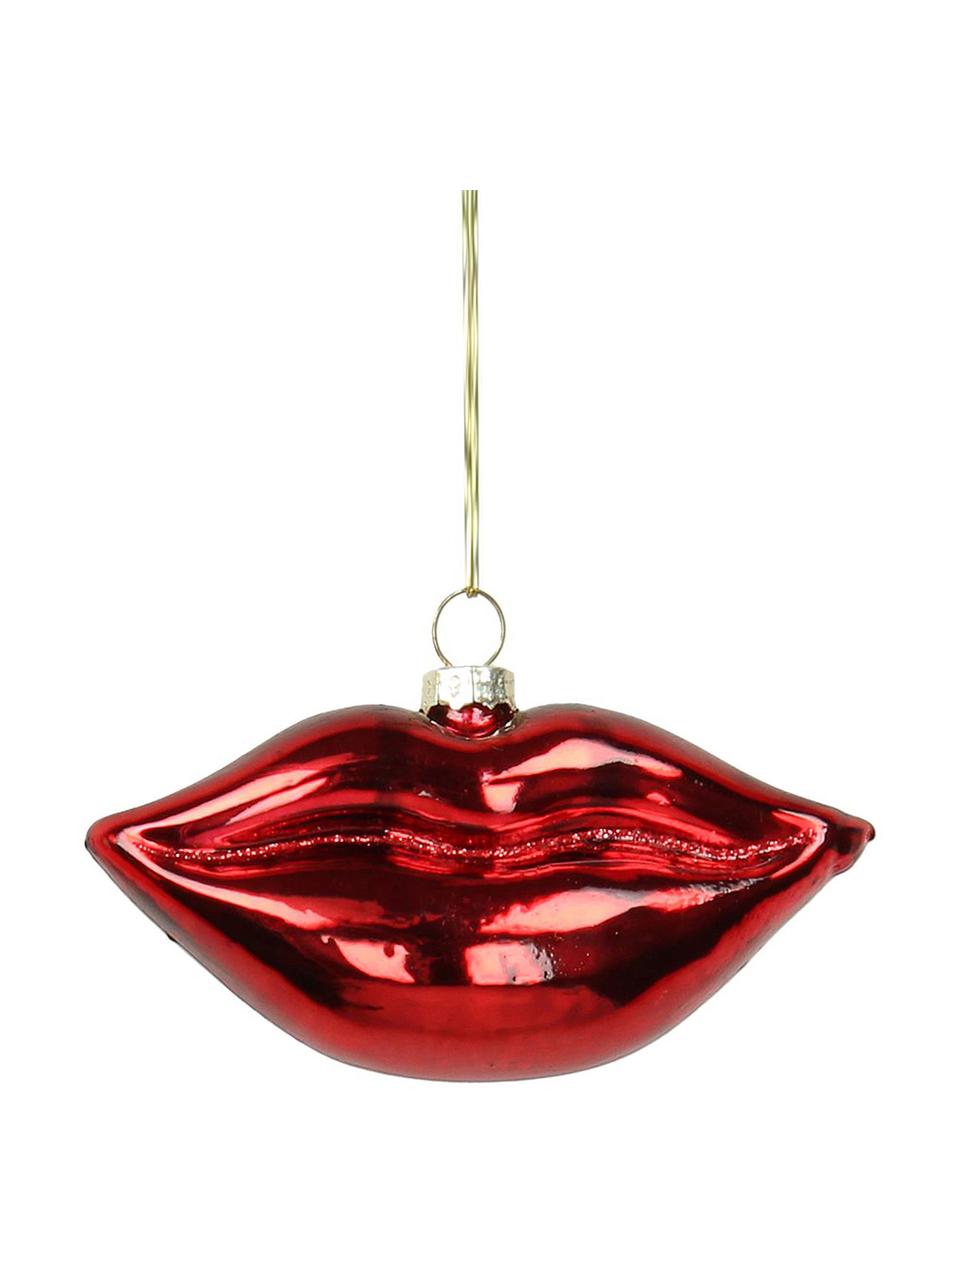 Adornos navideños Lips, 2 uds., Rojo, An 9 x Al 5 cm